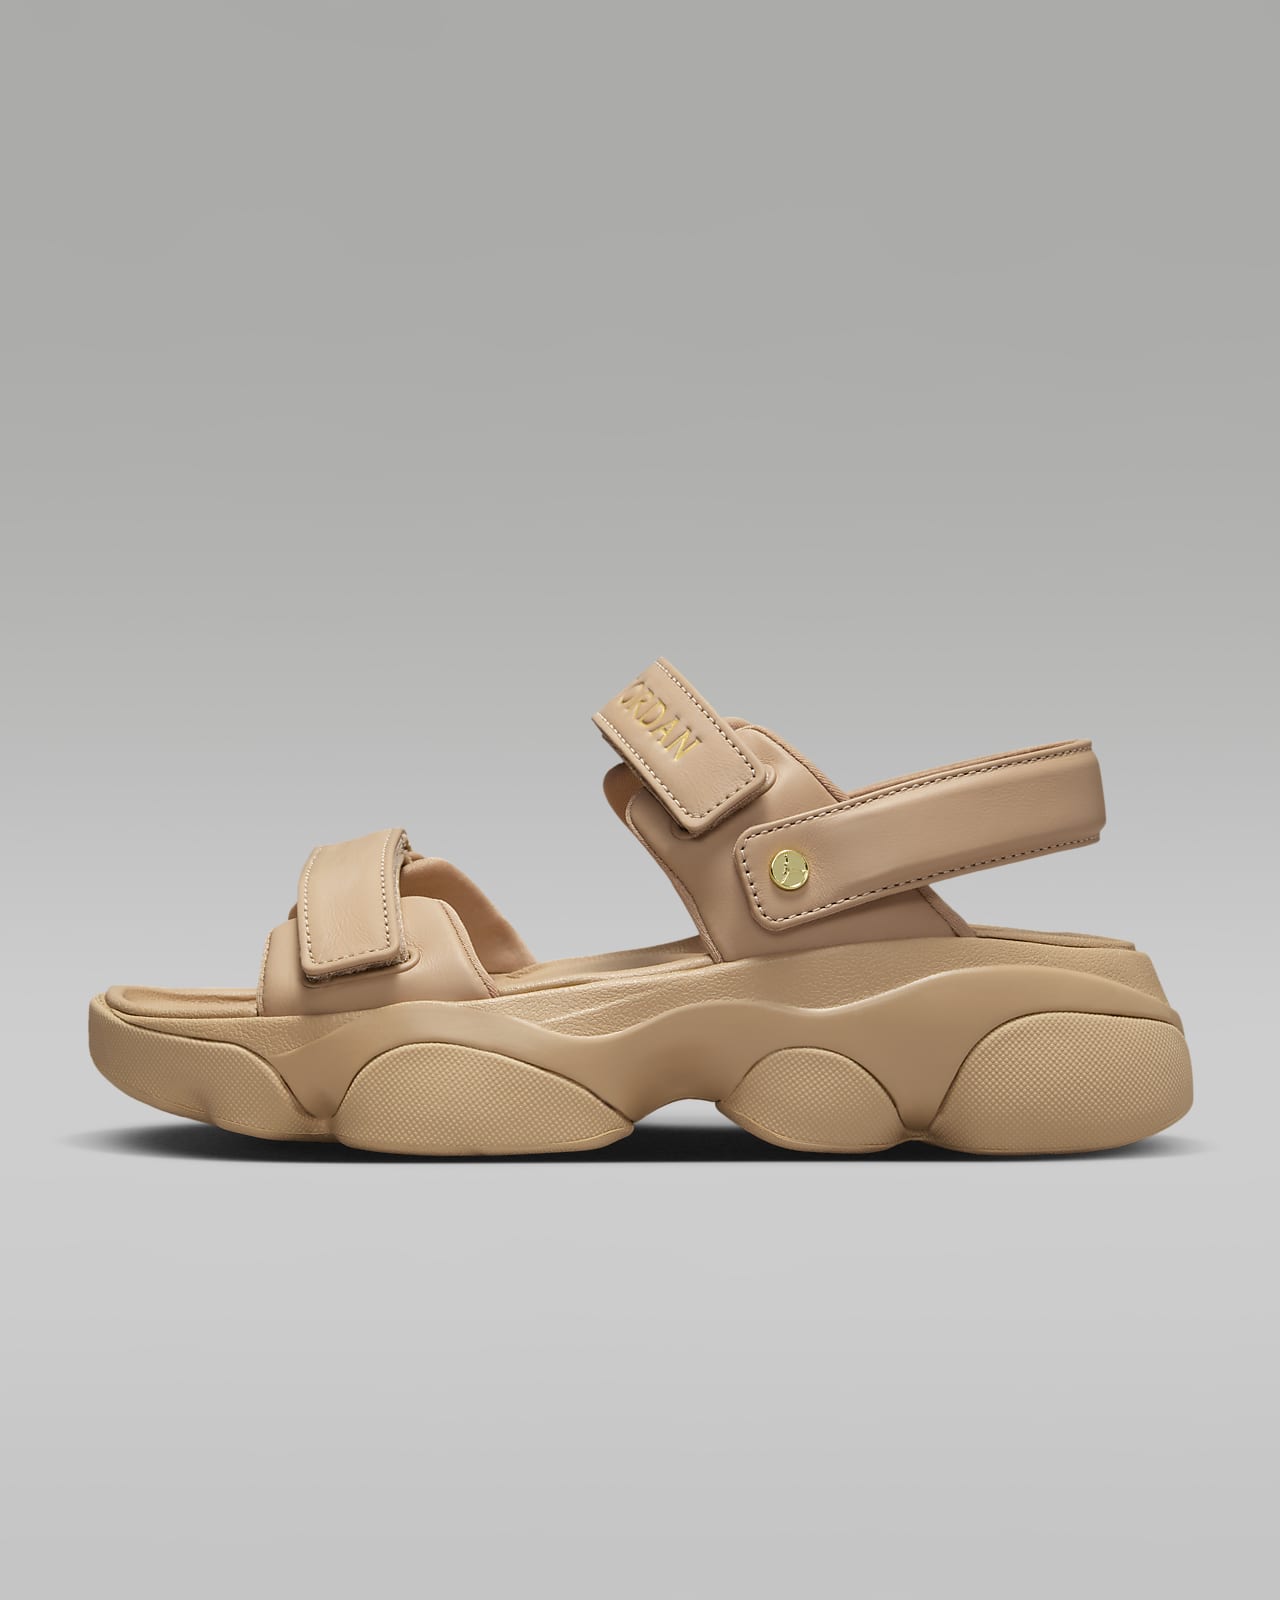 Boys' Nike Sandals: Flip-Flop, Waterproof, Leather & More | Nordstrom